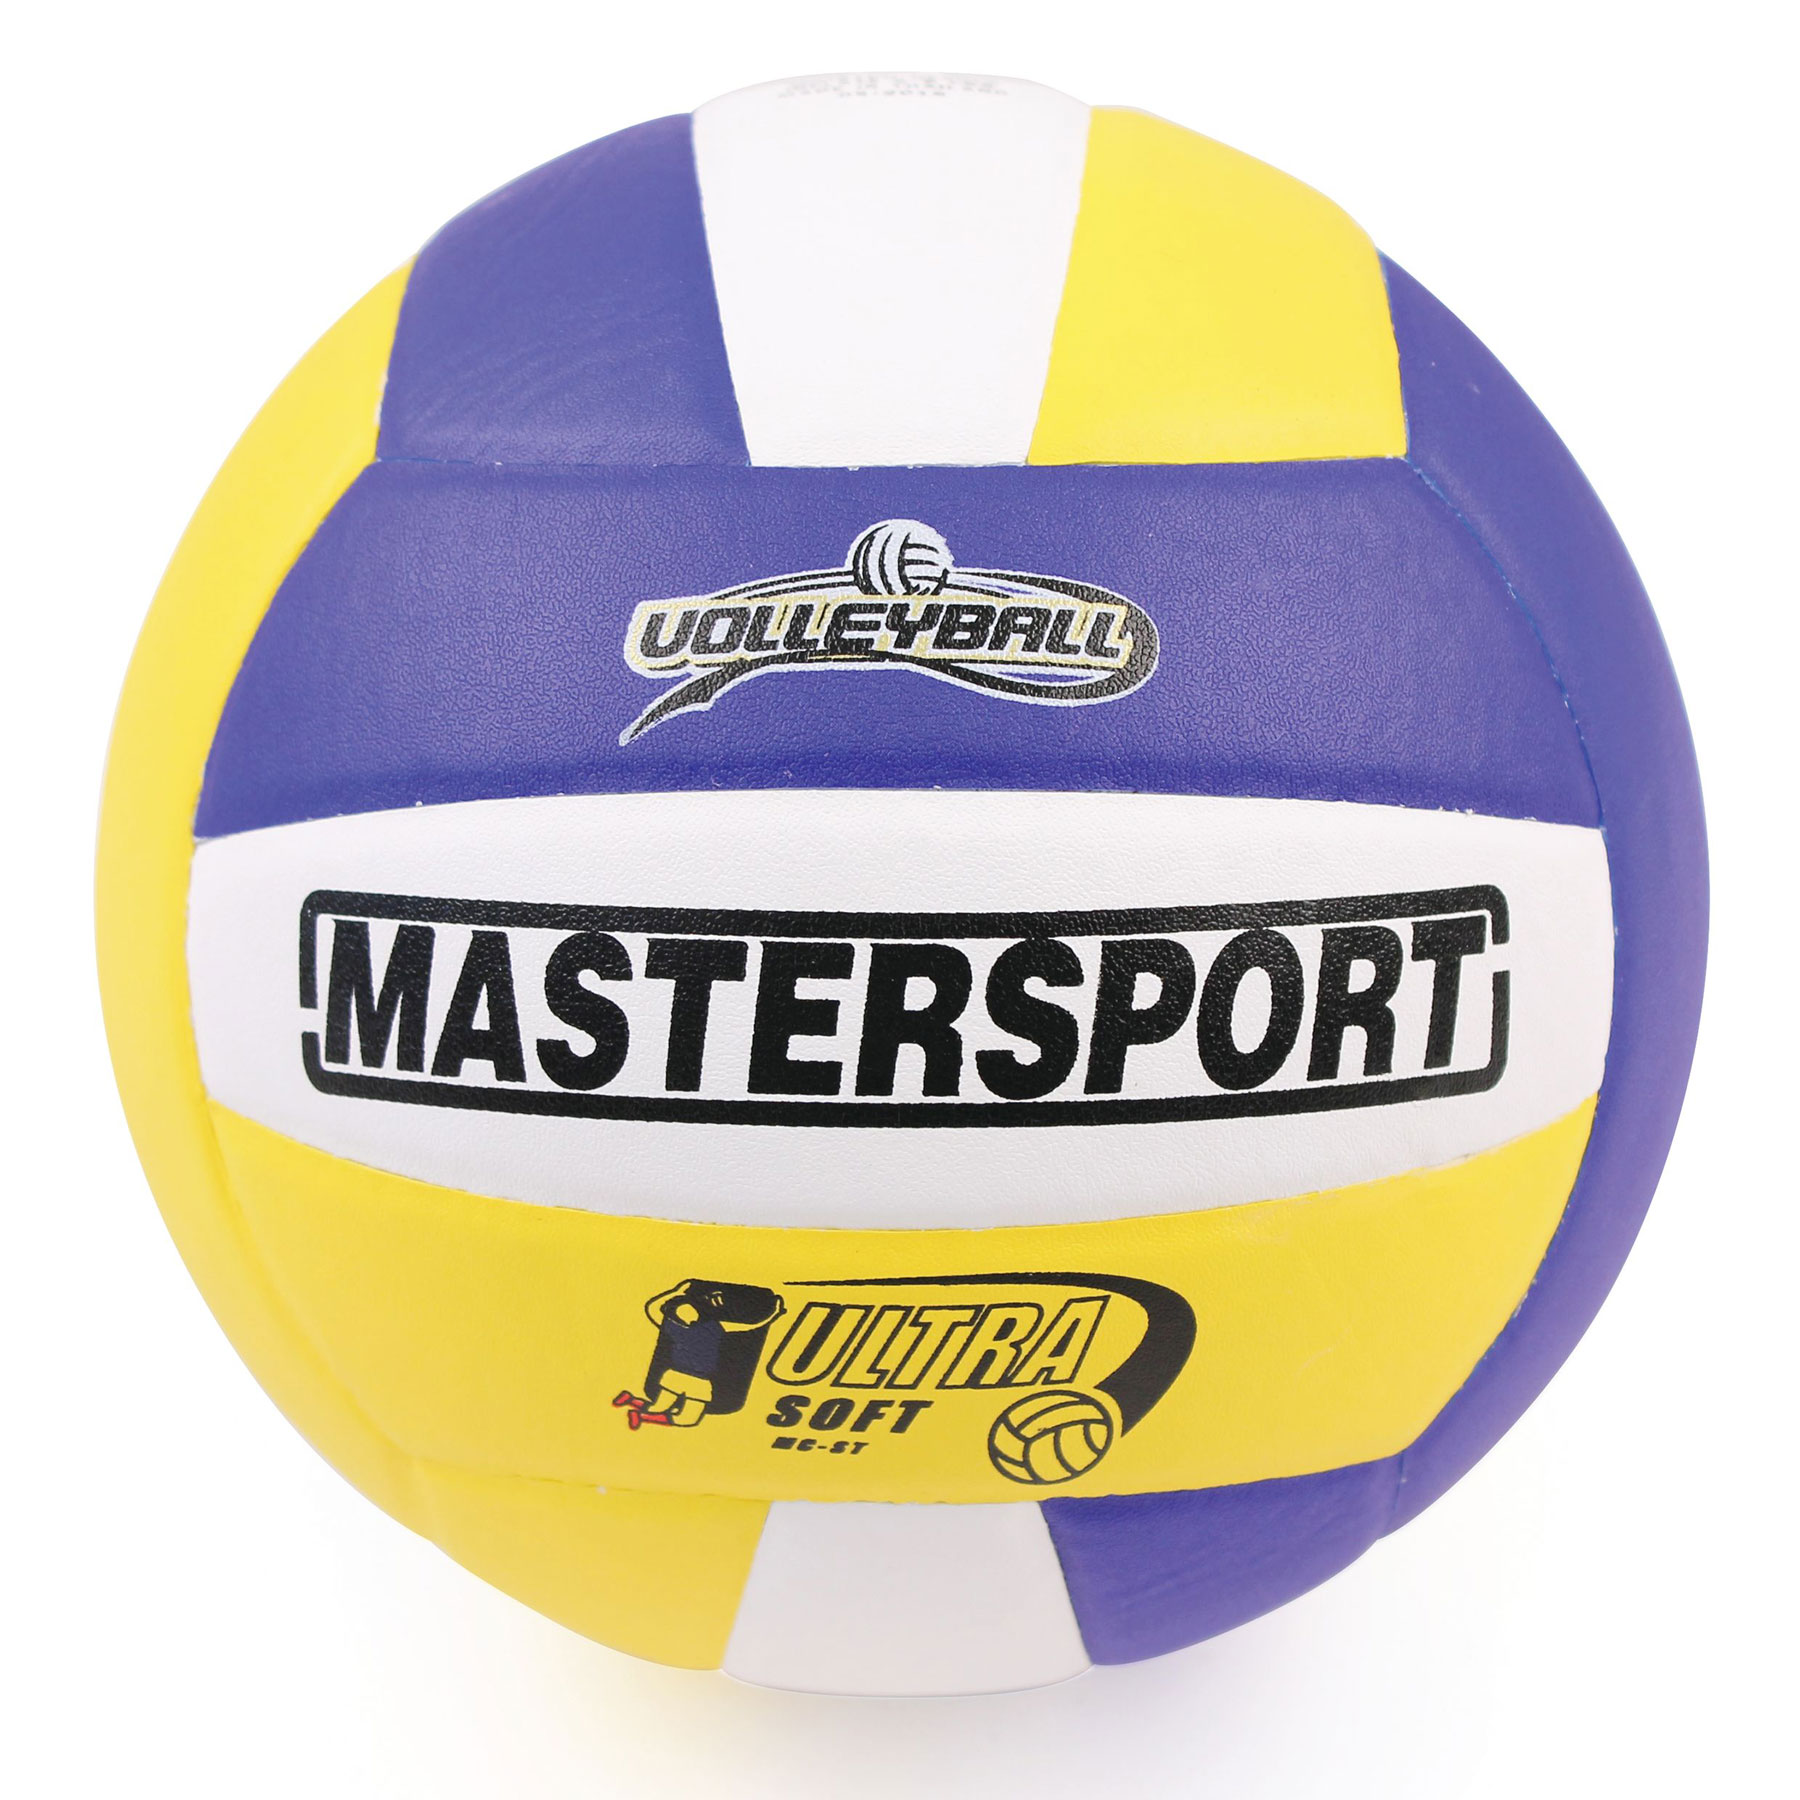 Mastersport Ultrasoft Volleyball - Size 5